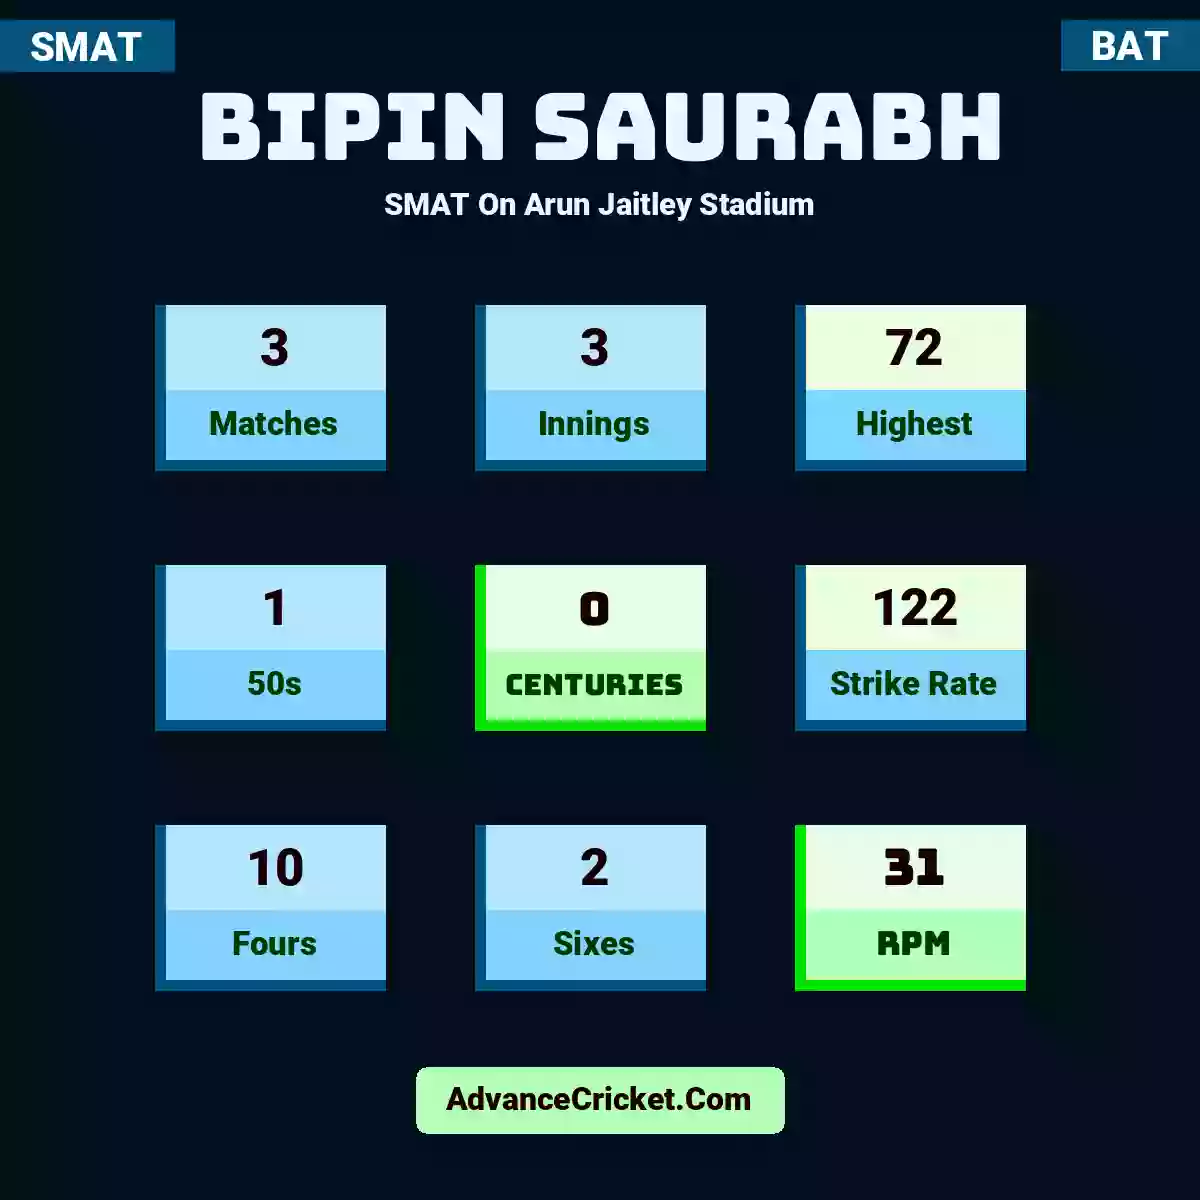 Bipin Saurabh SMAT  On Arun Jaitley Stadium, Bipin Saurabh played 3 matches, scored 72 runs as highest, 1 half-centuries, and 0 centuries, with a strike rate of 122. B.Saurabh hit 10 fours and 2 sixes, with an RPM of 31.